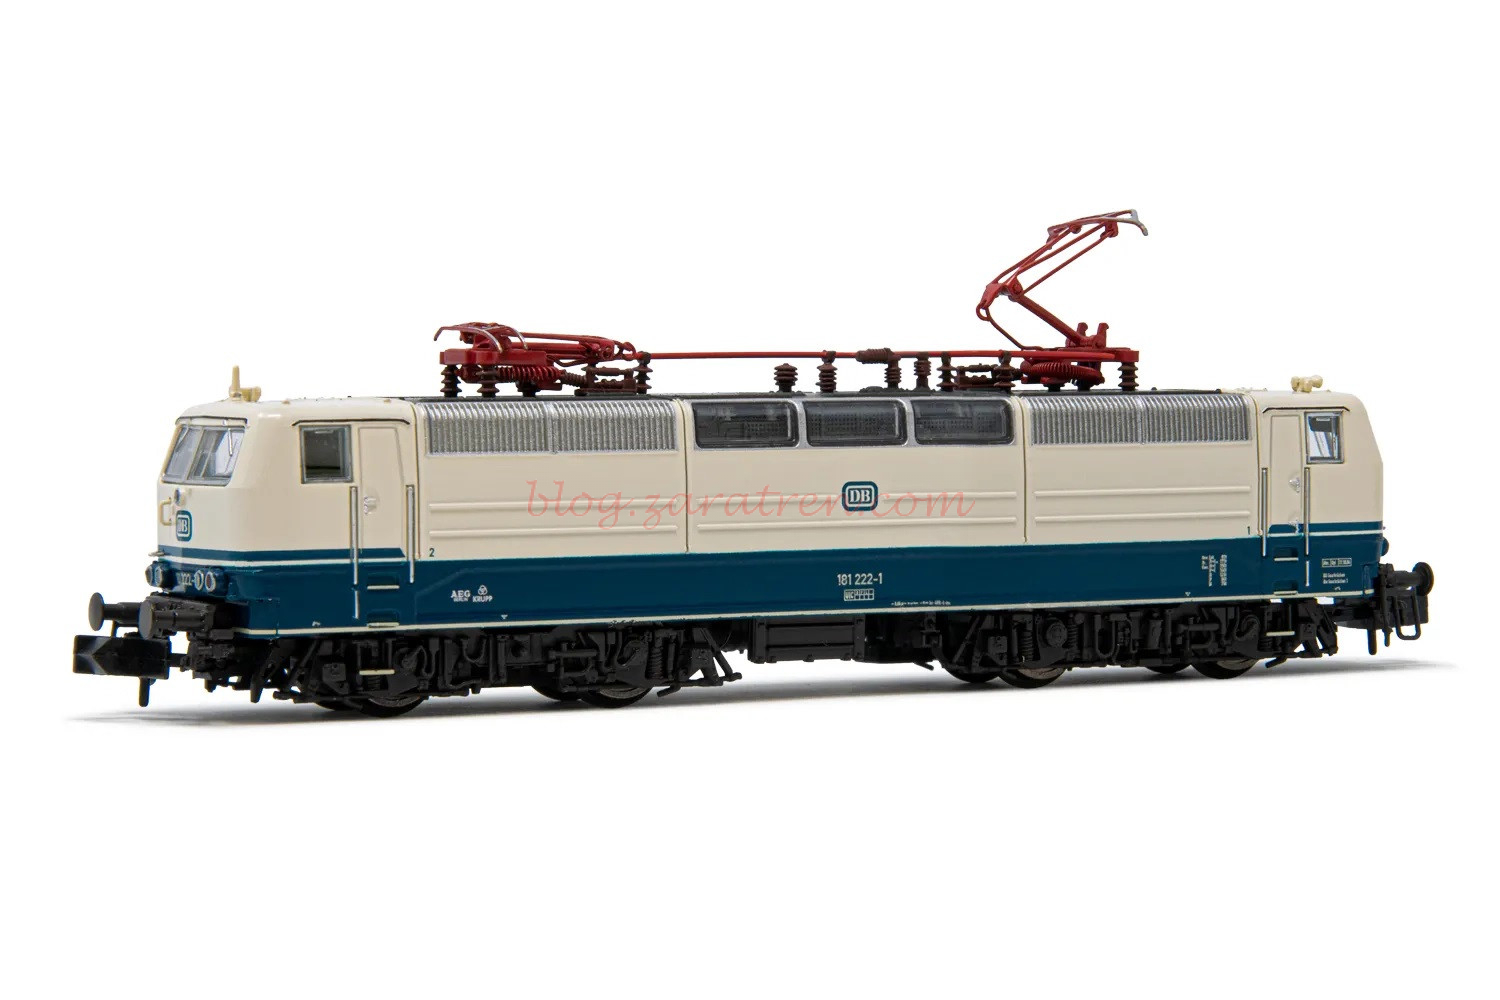 Arnold – Locomotora Electrica clase 181.2 Dec. Azul/Beige, Epoca IV, Escala N, Analogica. Ref: HN2492